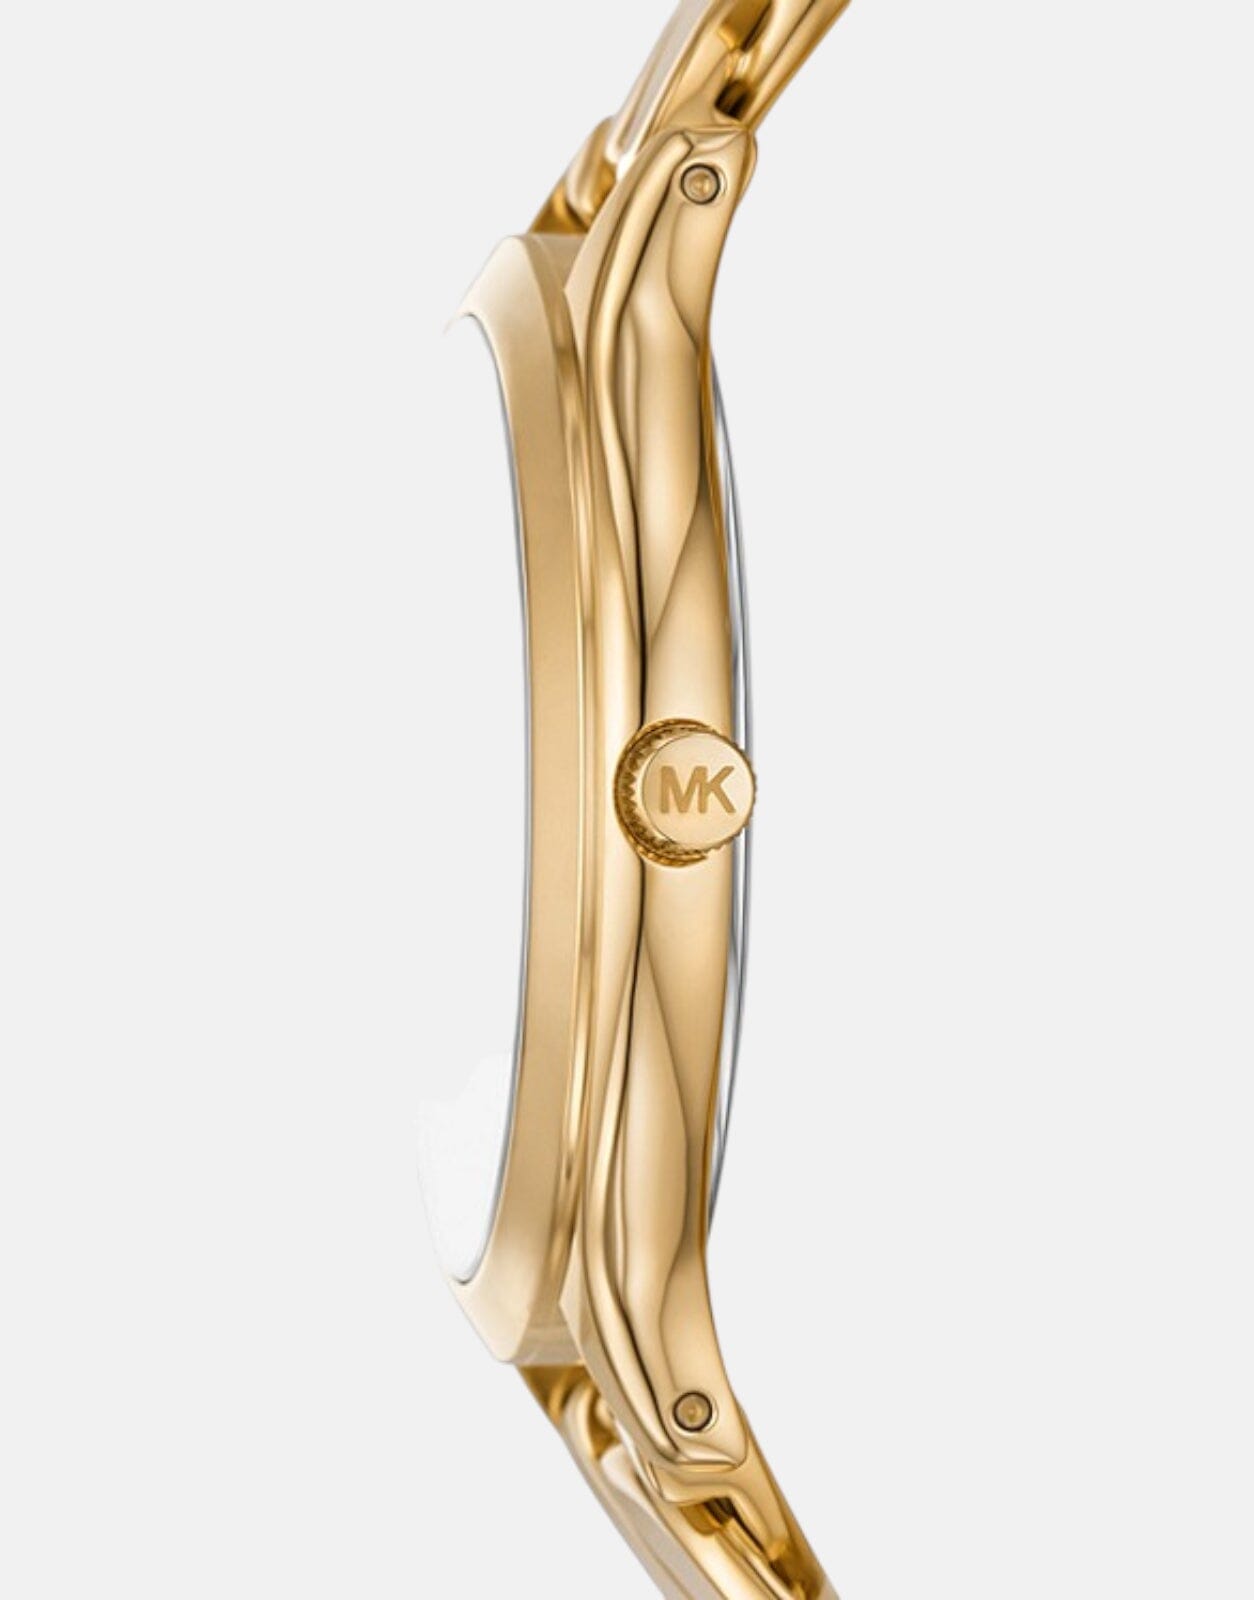 Michael Kors Runway Gold Stainless Steel Watch - Subwear